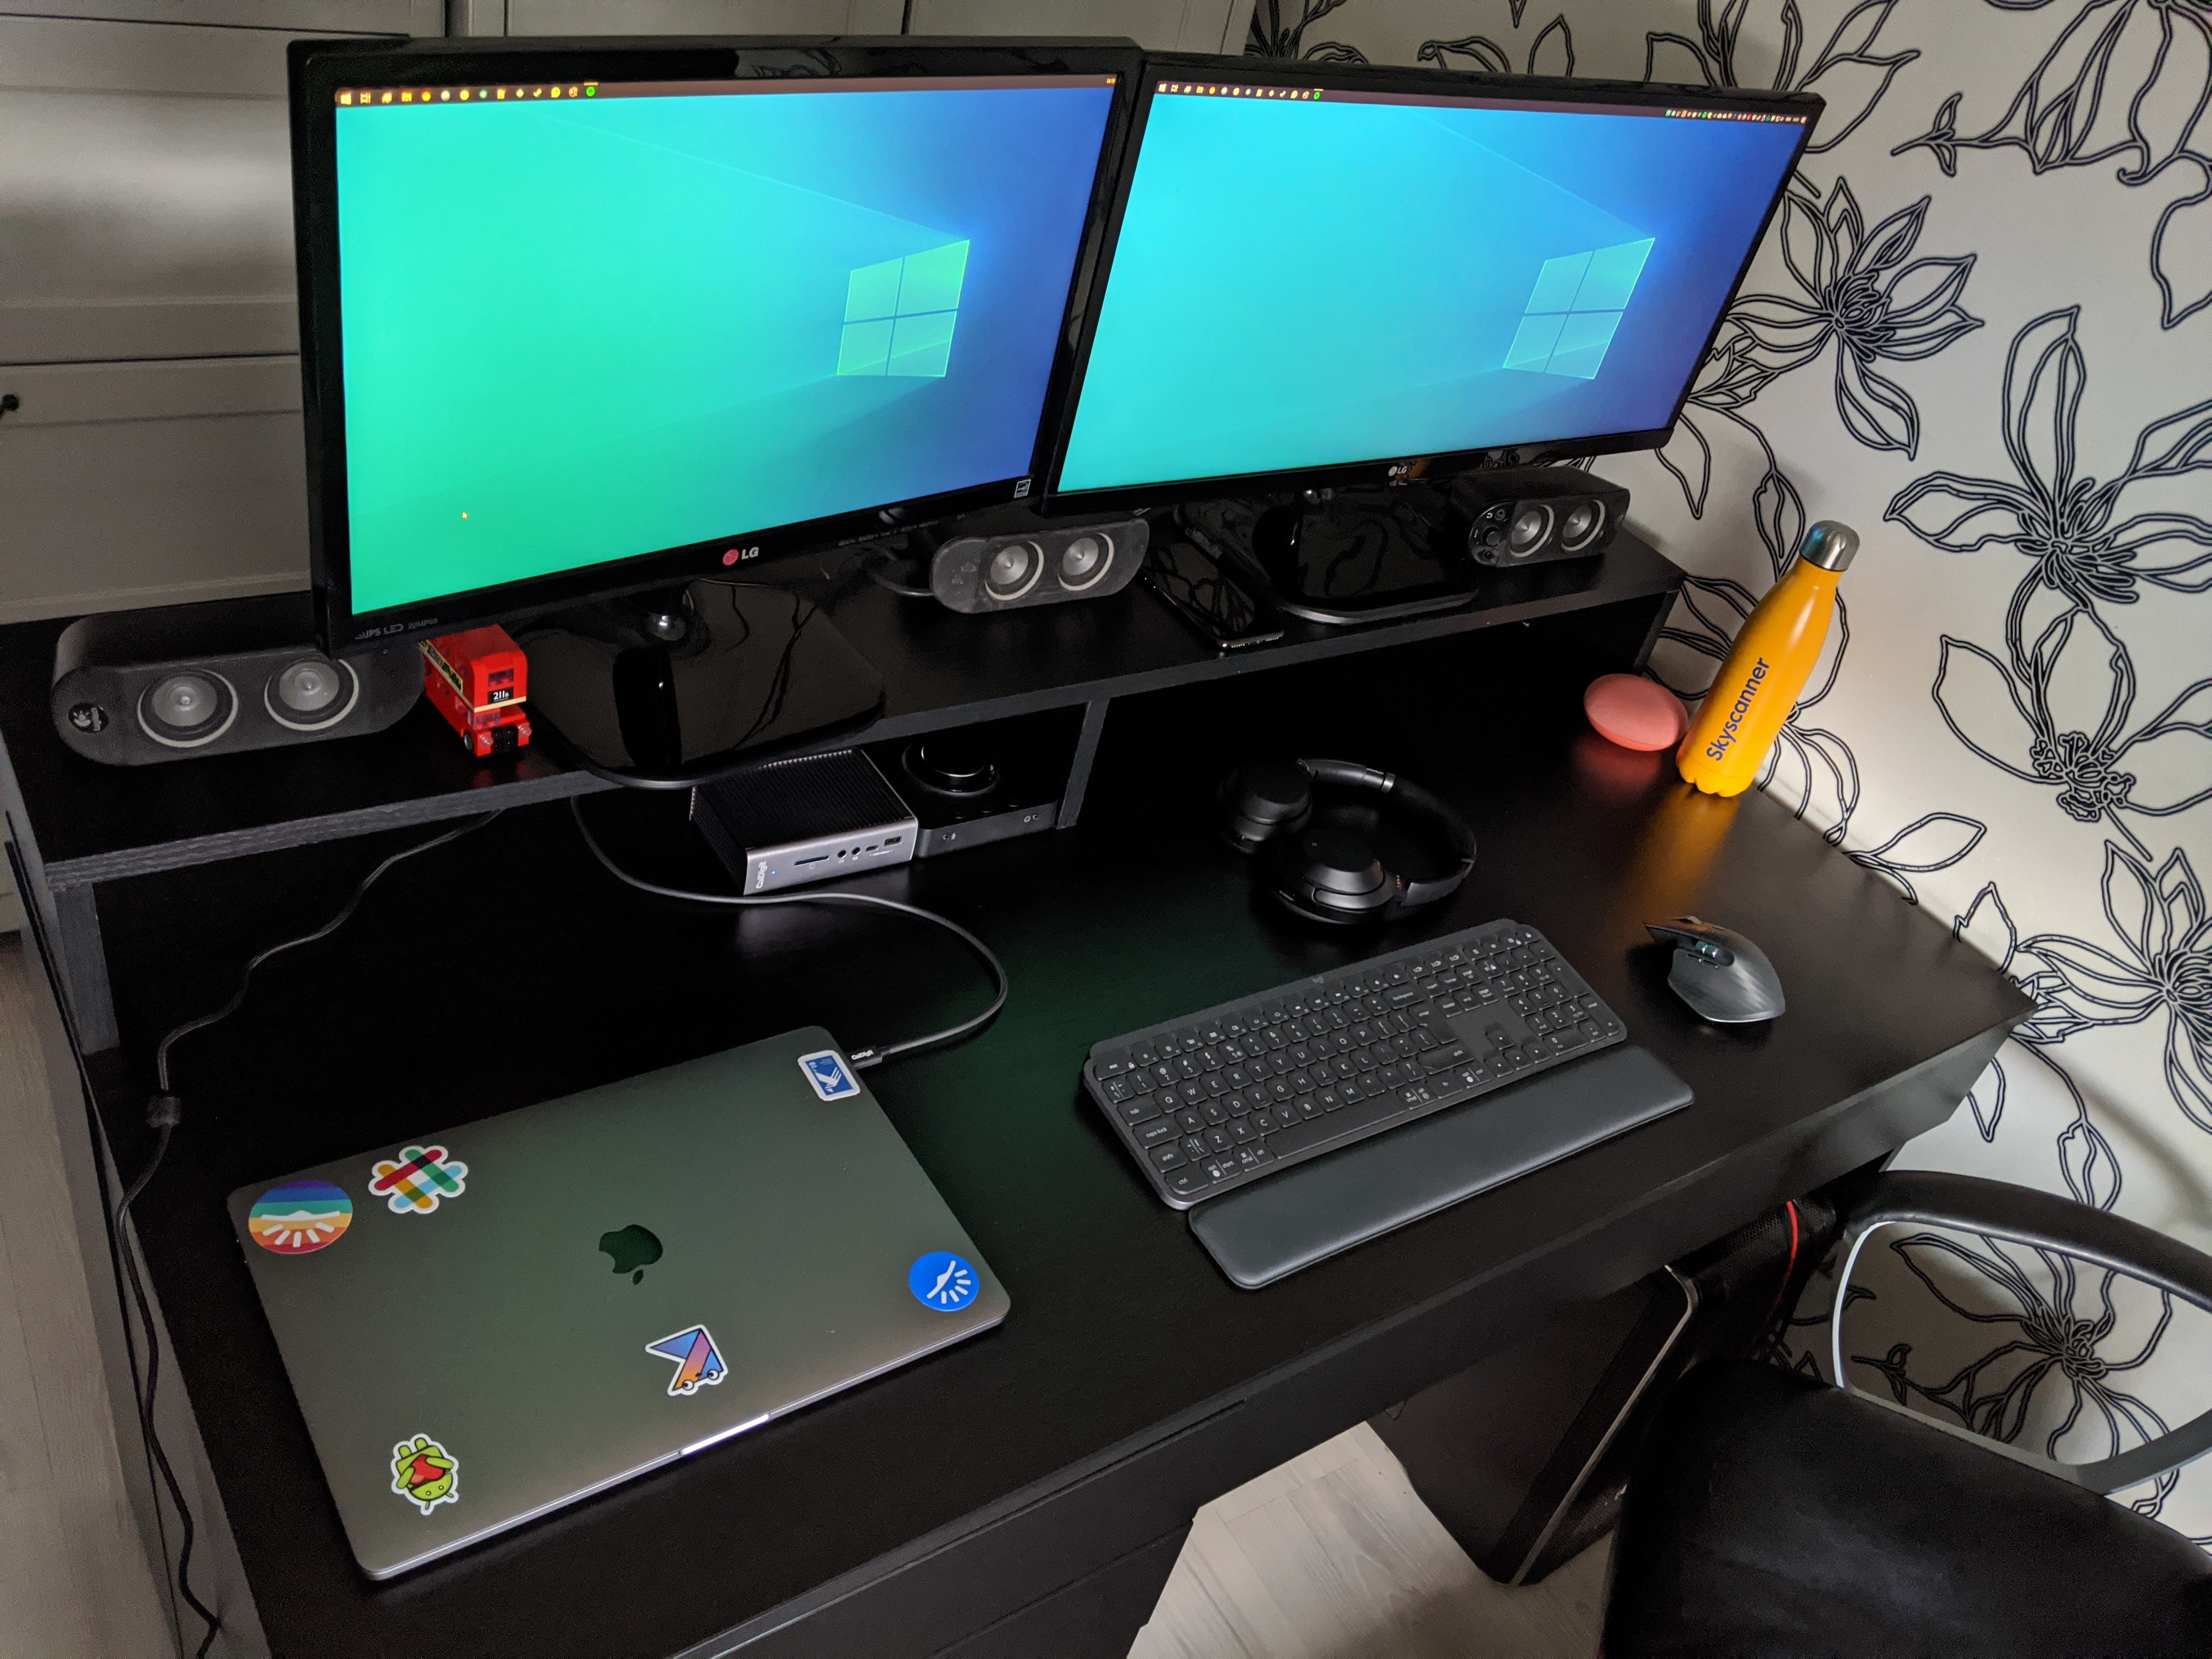 The desktop deployed on the final setup